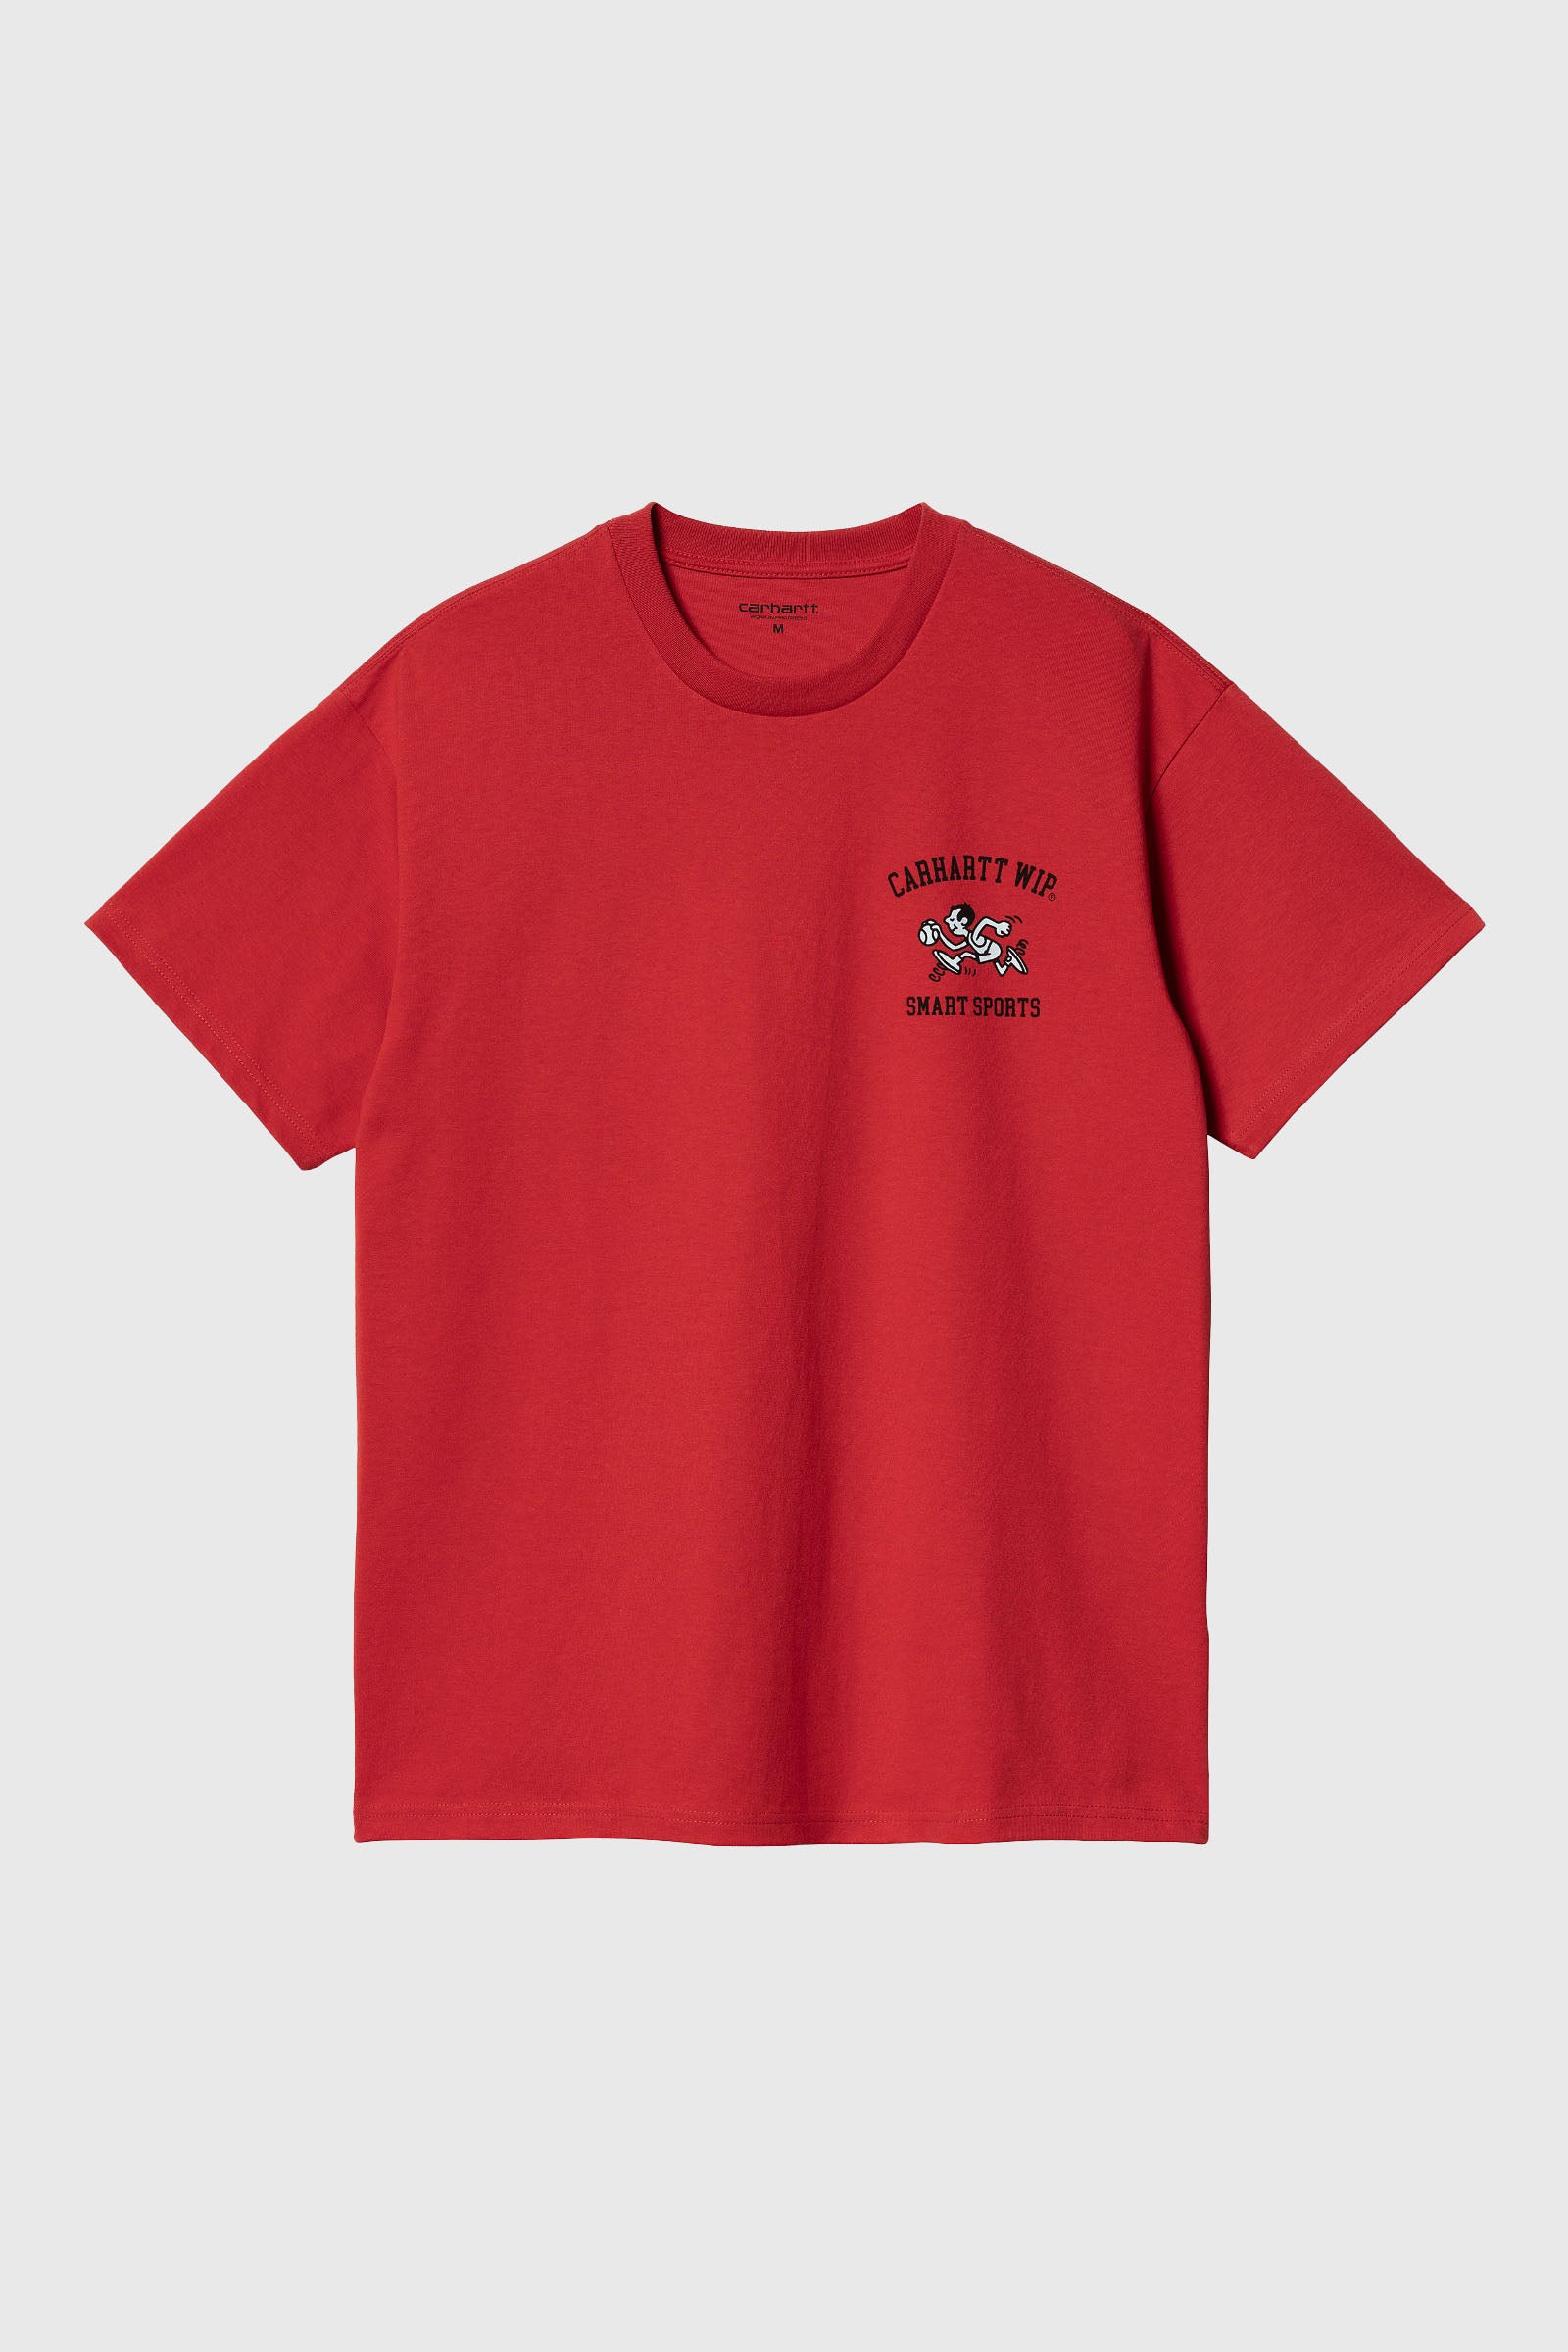 Carhartt WIP T-Shirt S/S Smart Sports Cotton Red - 3